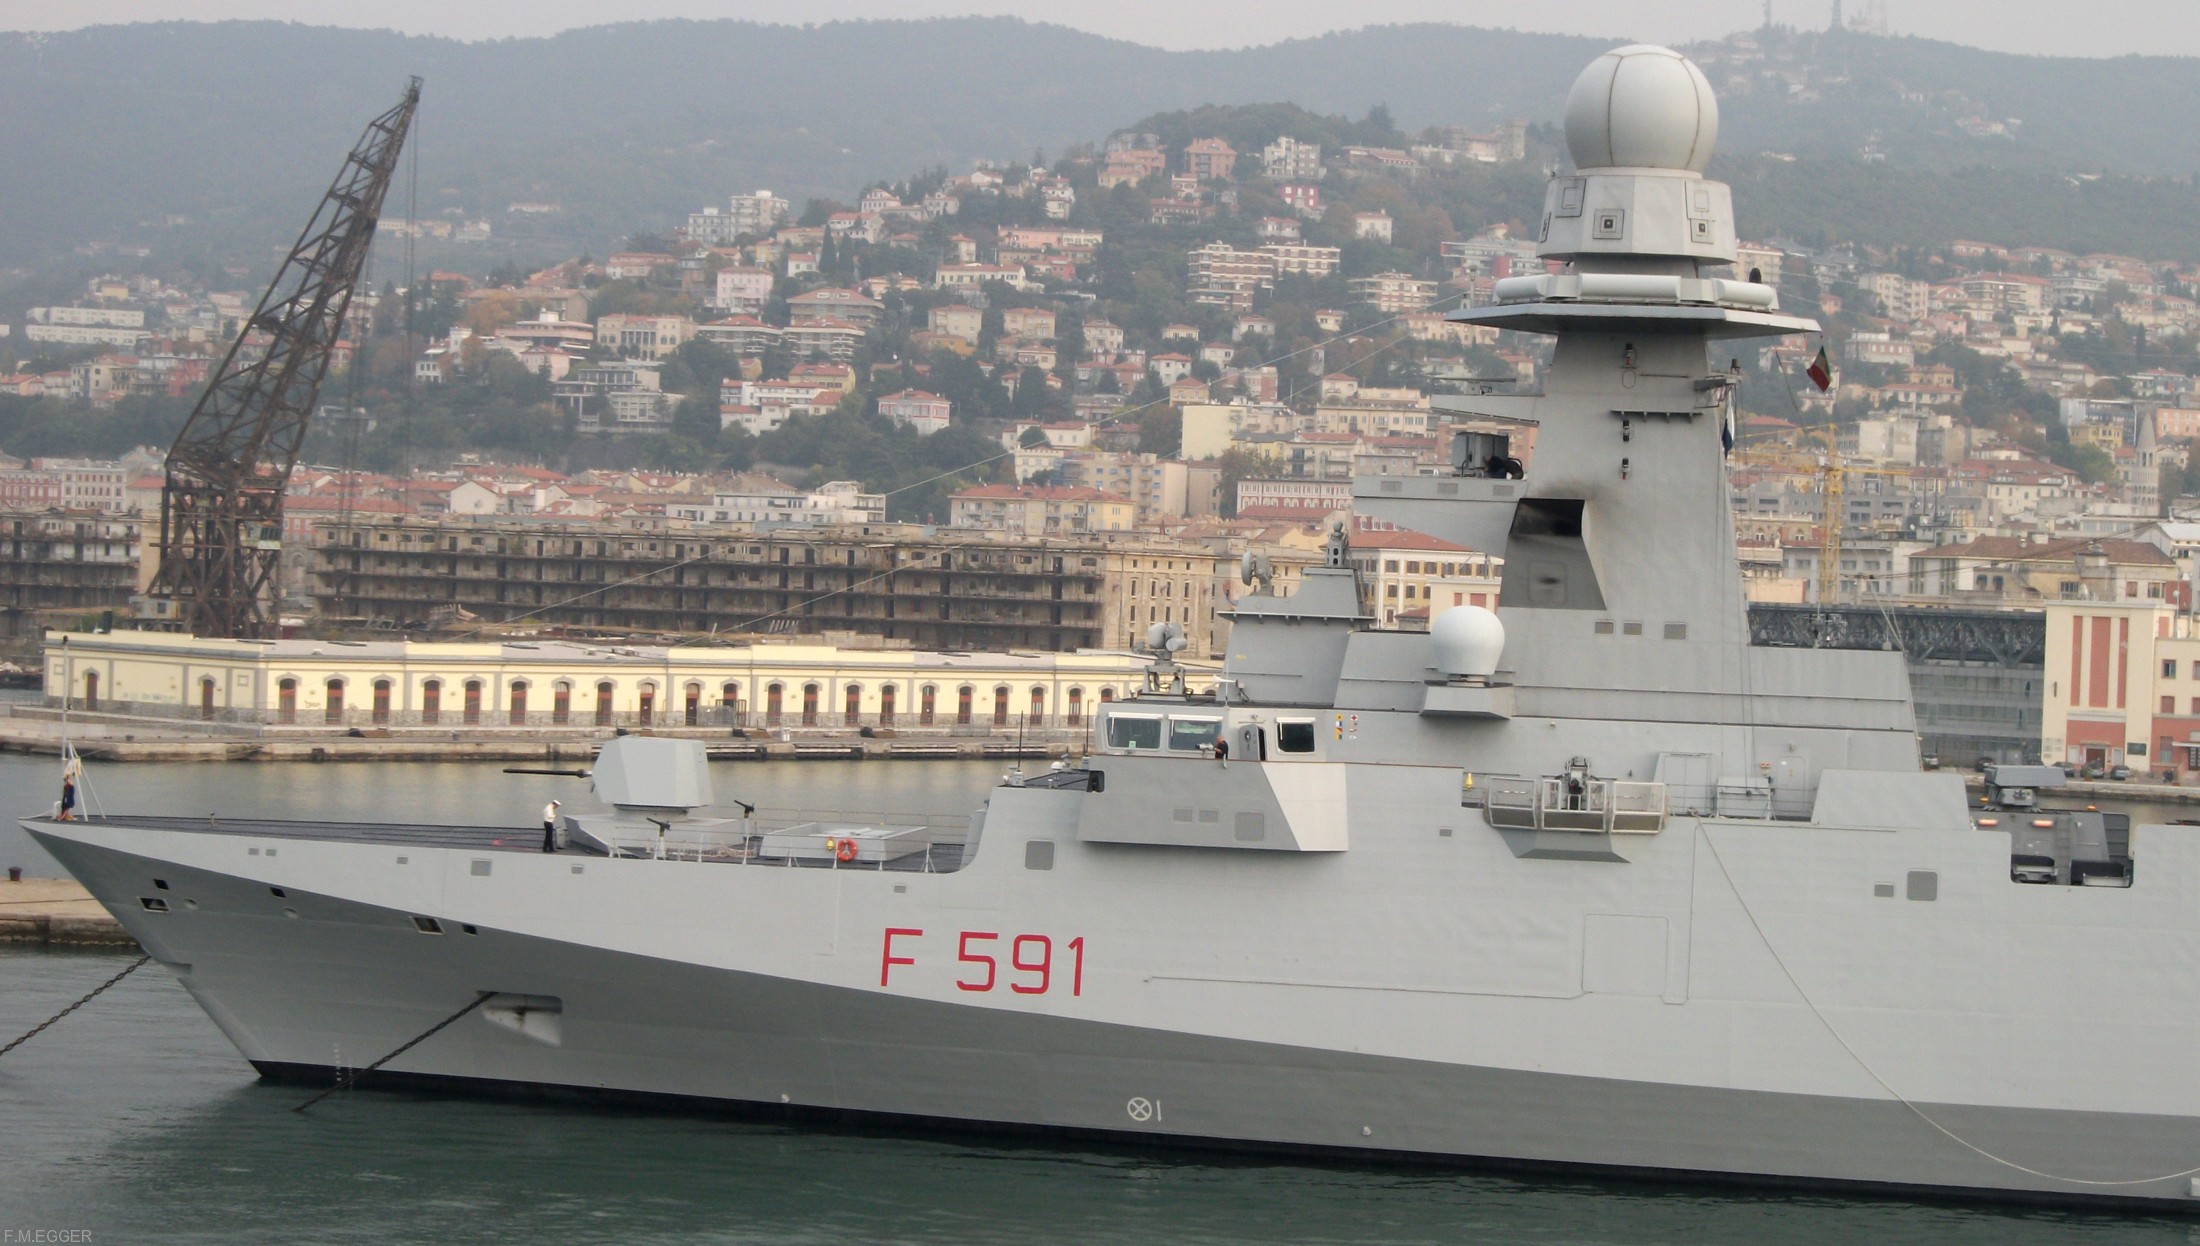 f-591 virginio fasan fremm bergamini class frigate italian navy marine militare 04